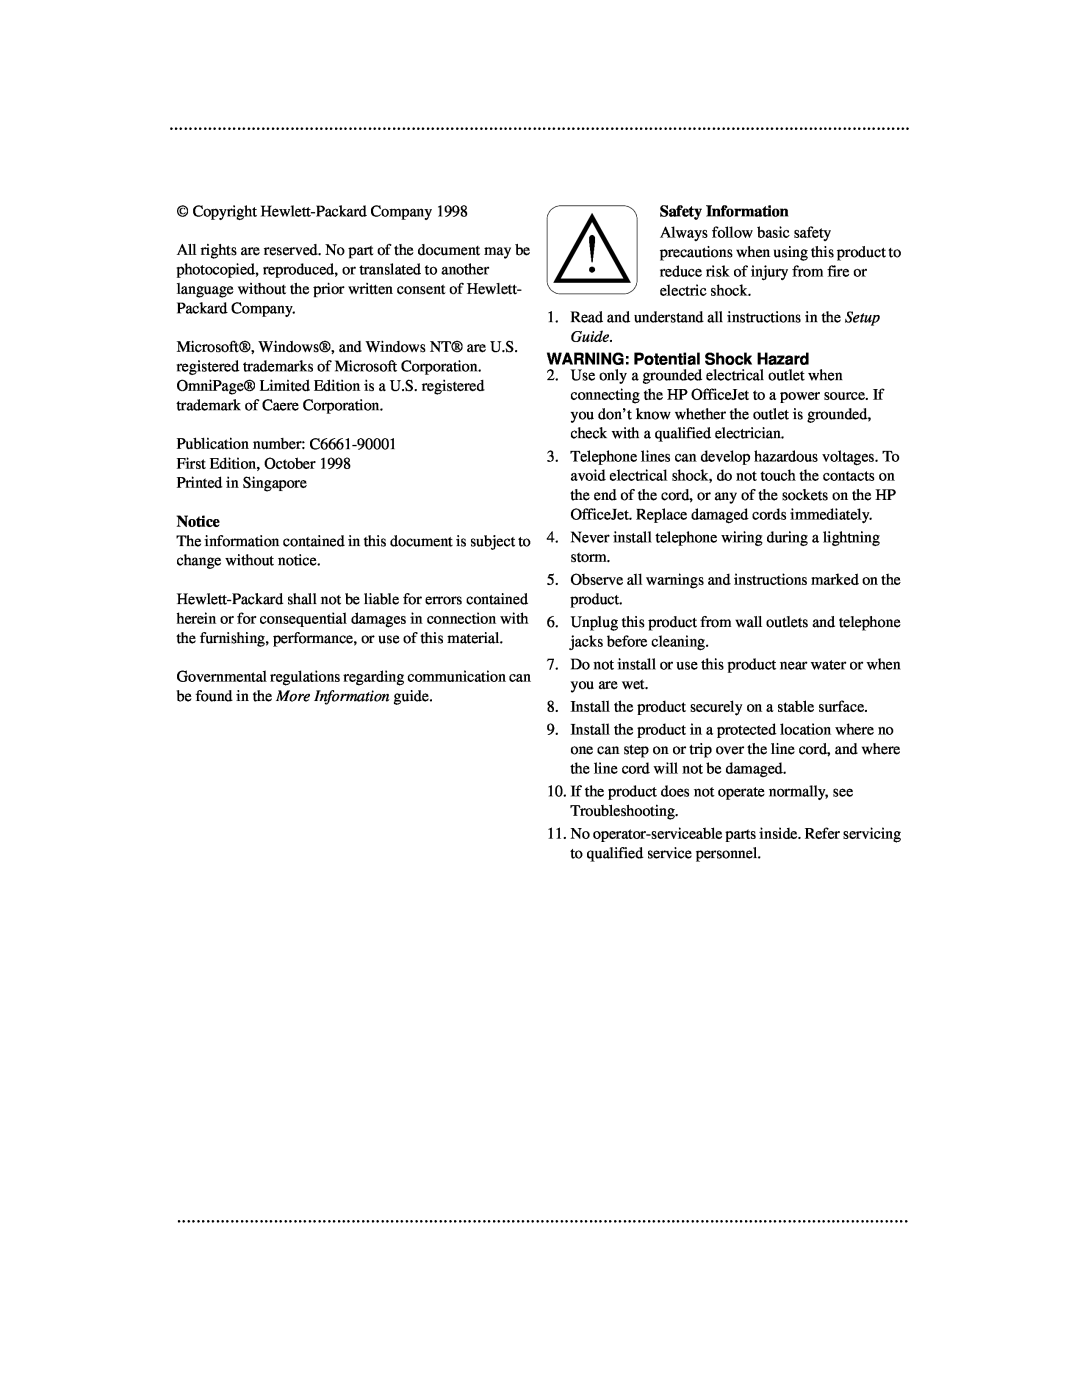 HP 700 manual Safety Information, WARNING Potential Shock Hazard 